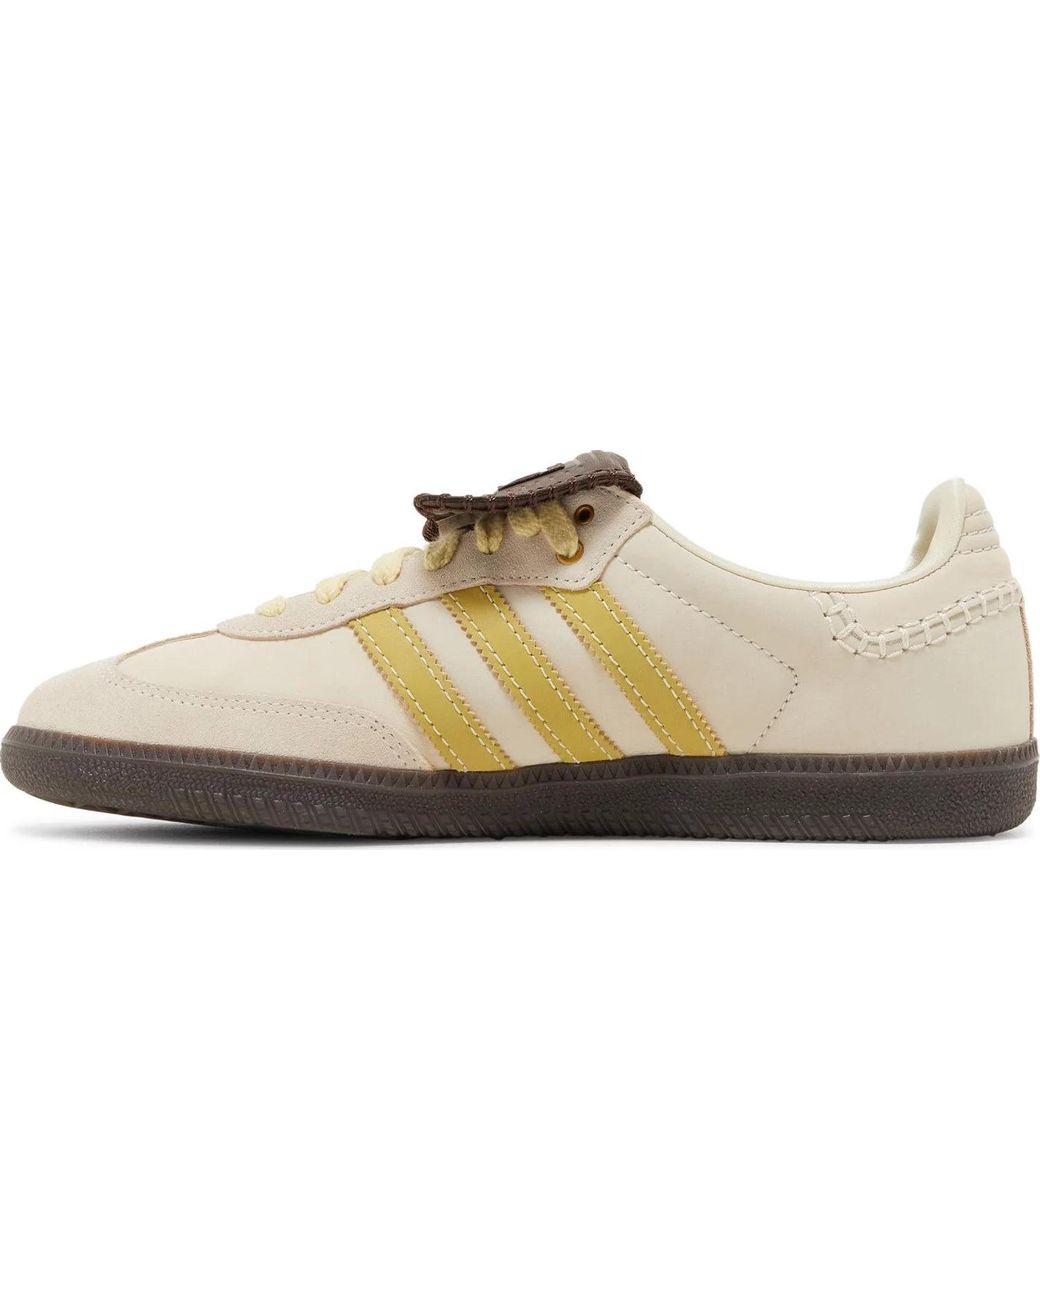 Adidas x Wales Bonner Samba Cream/ Yellow Sneakers - Farfetch